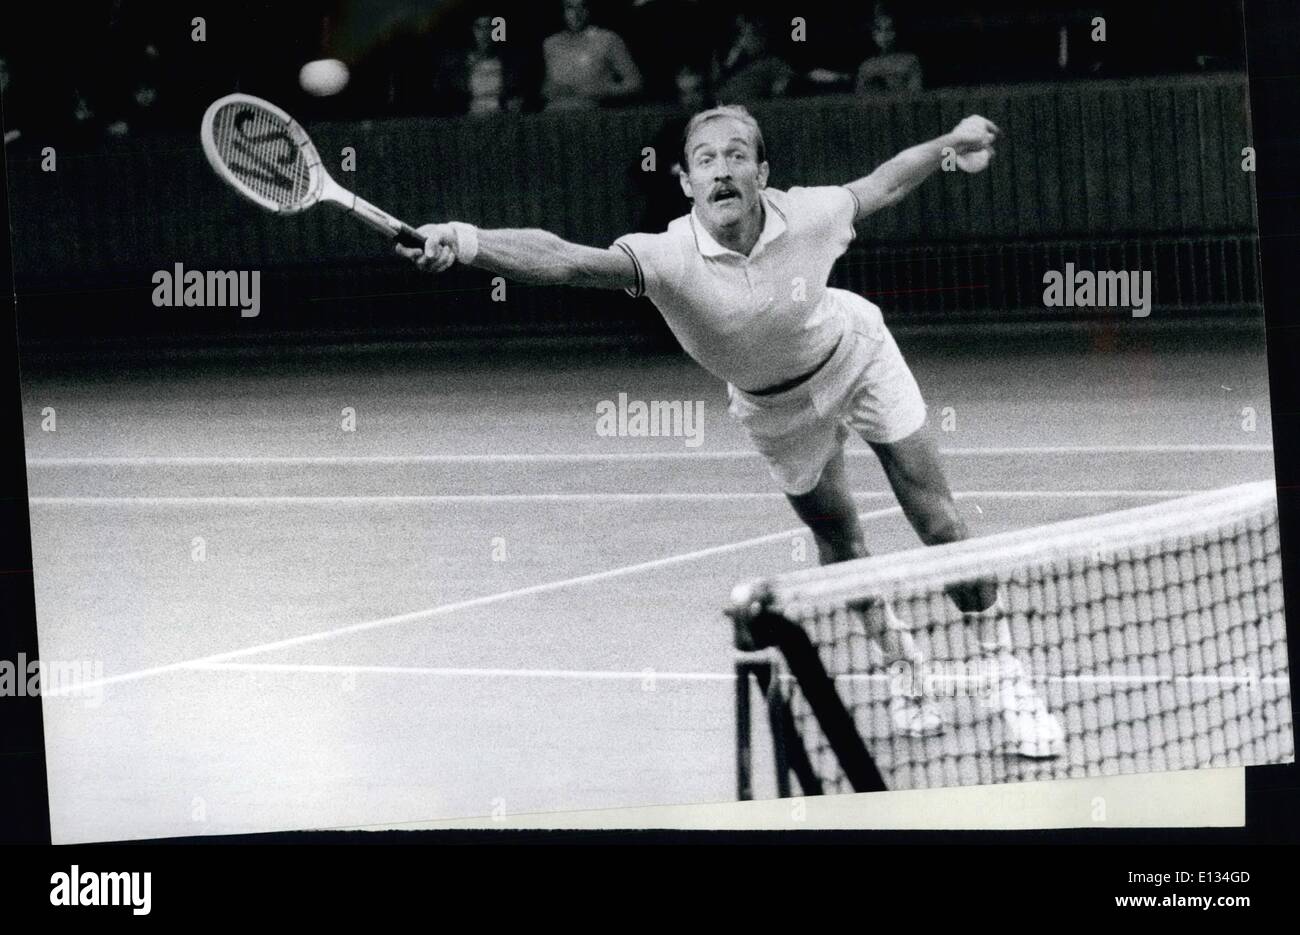 stan smith homme joueur de tennis